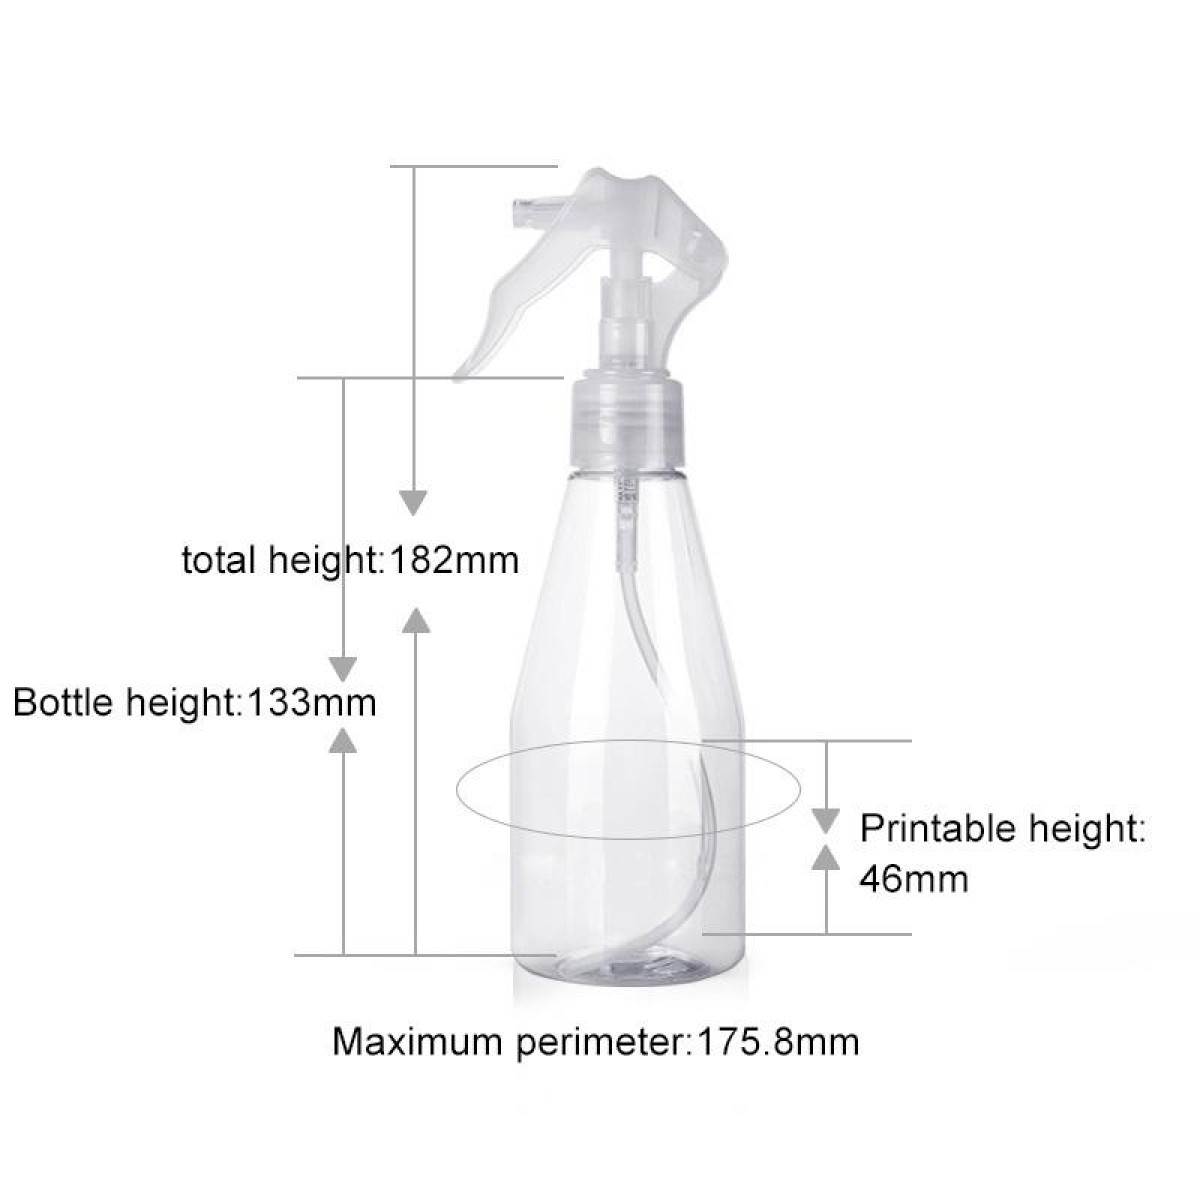 LW-SM08 Plastic Spray Bottles Leak Proof with Trigger Sprayer, 200ml